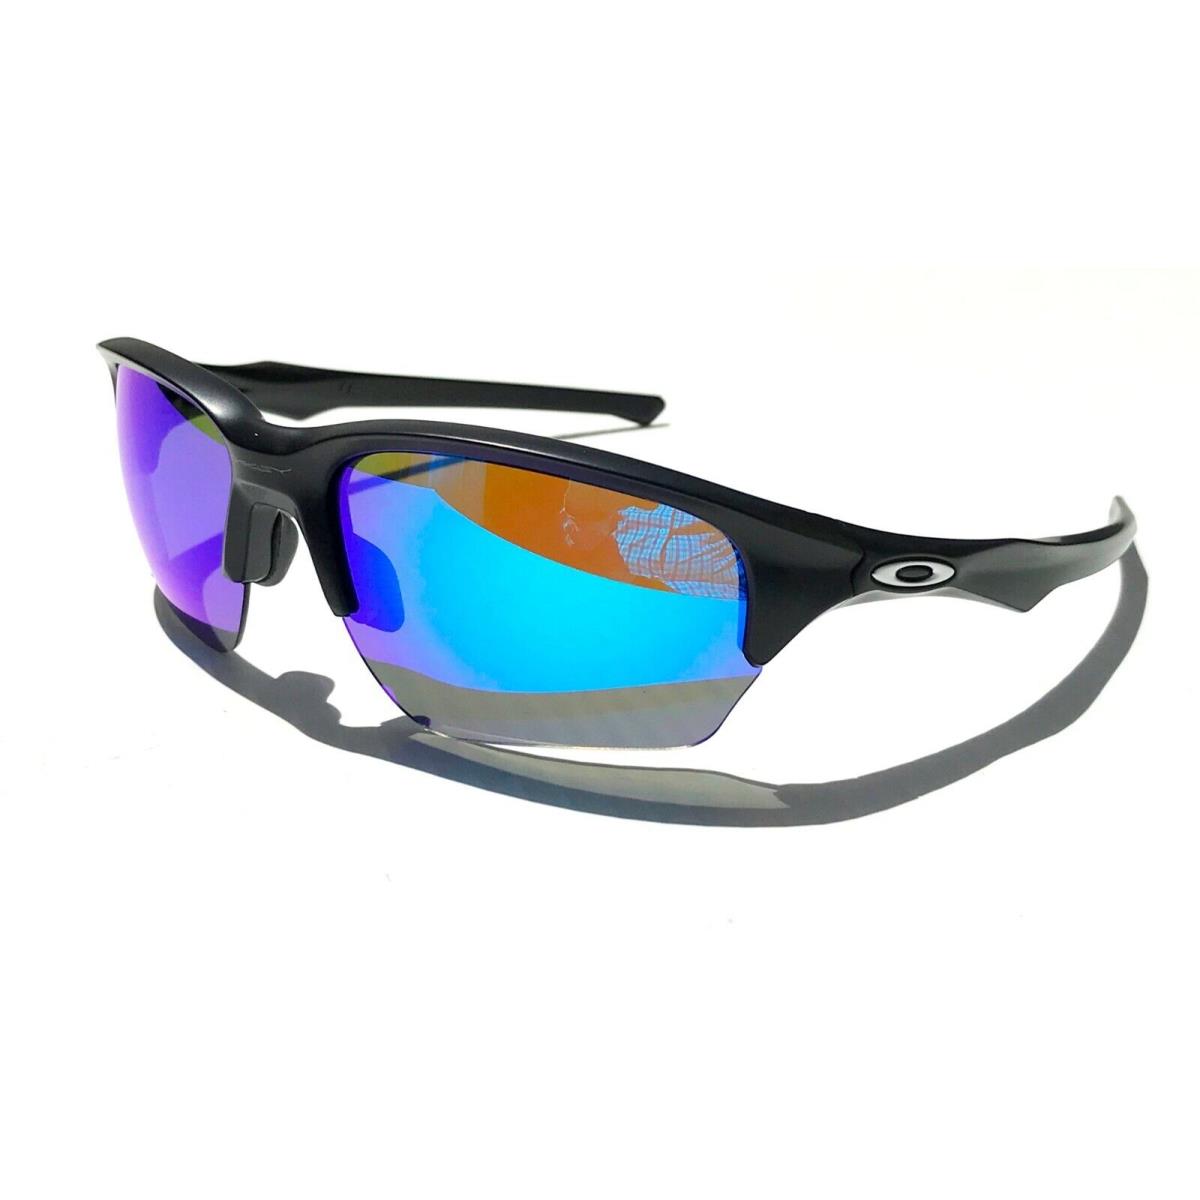 Oakley sunglasses Flak Beta - Black Satin Frame, Green Lens 6